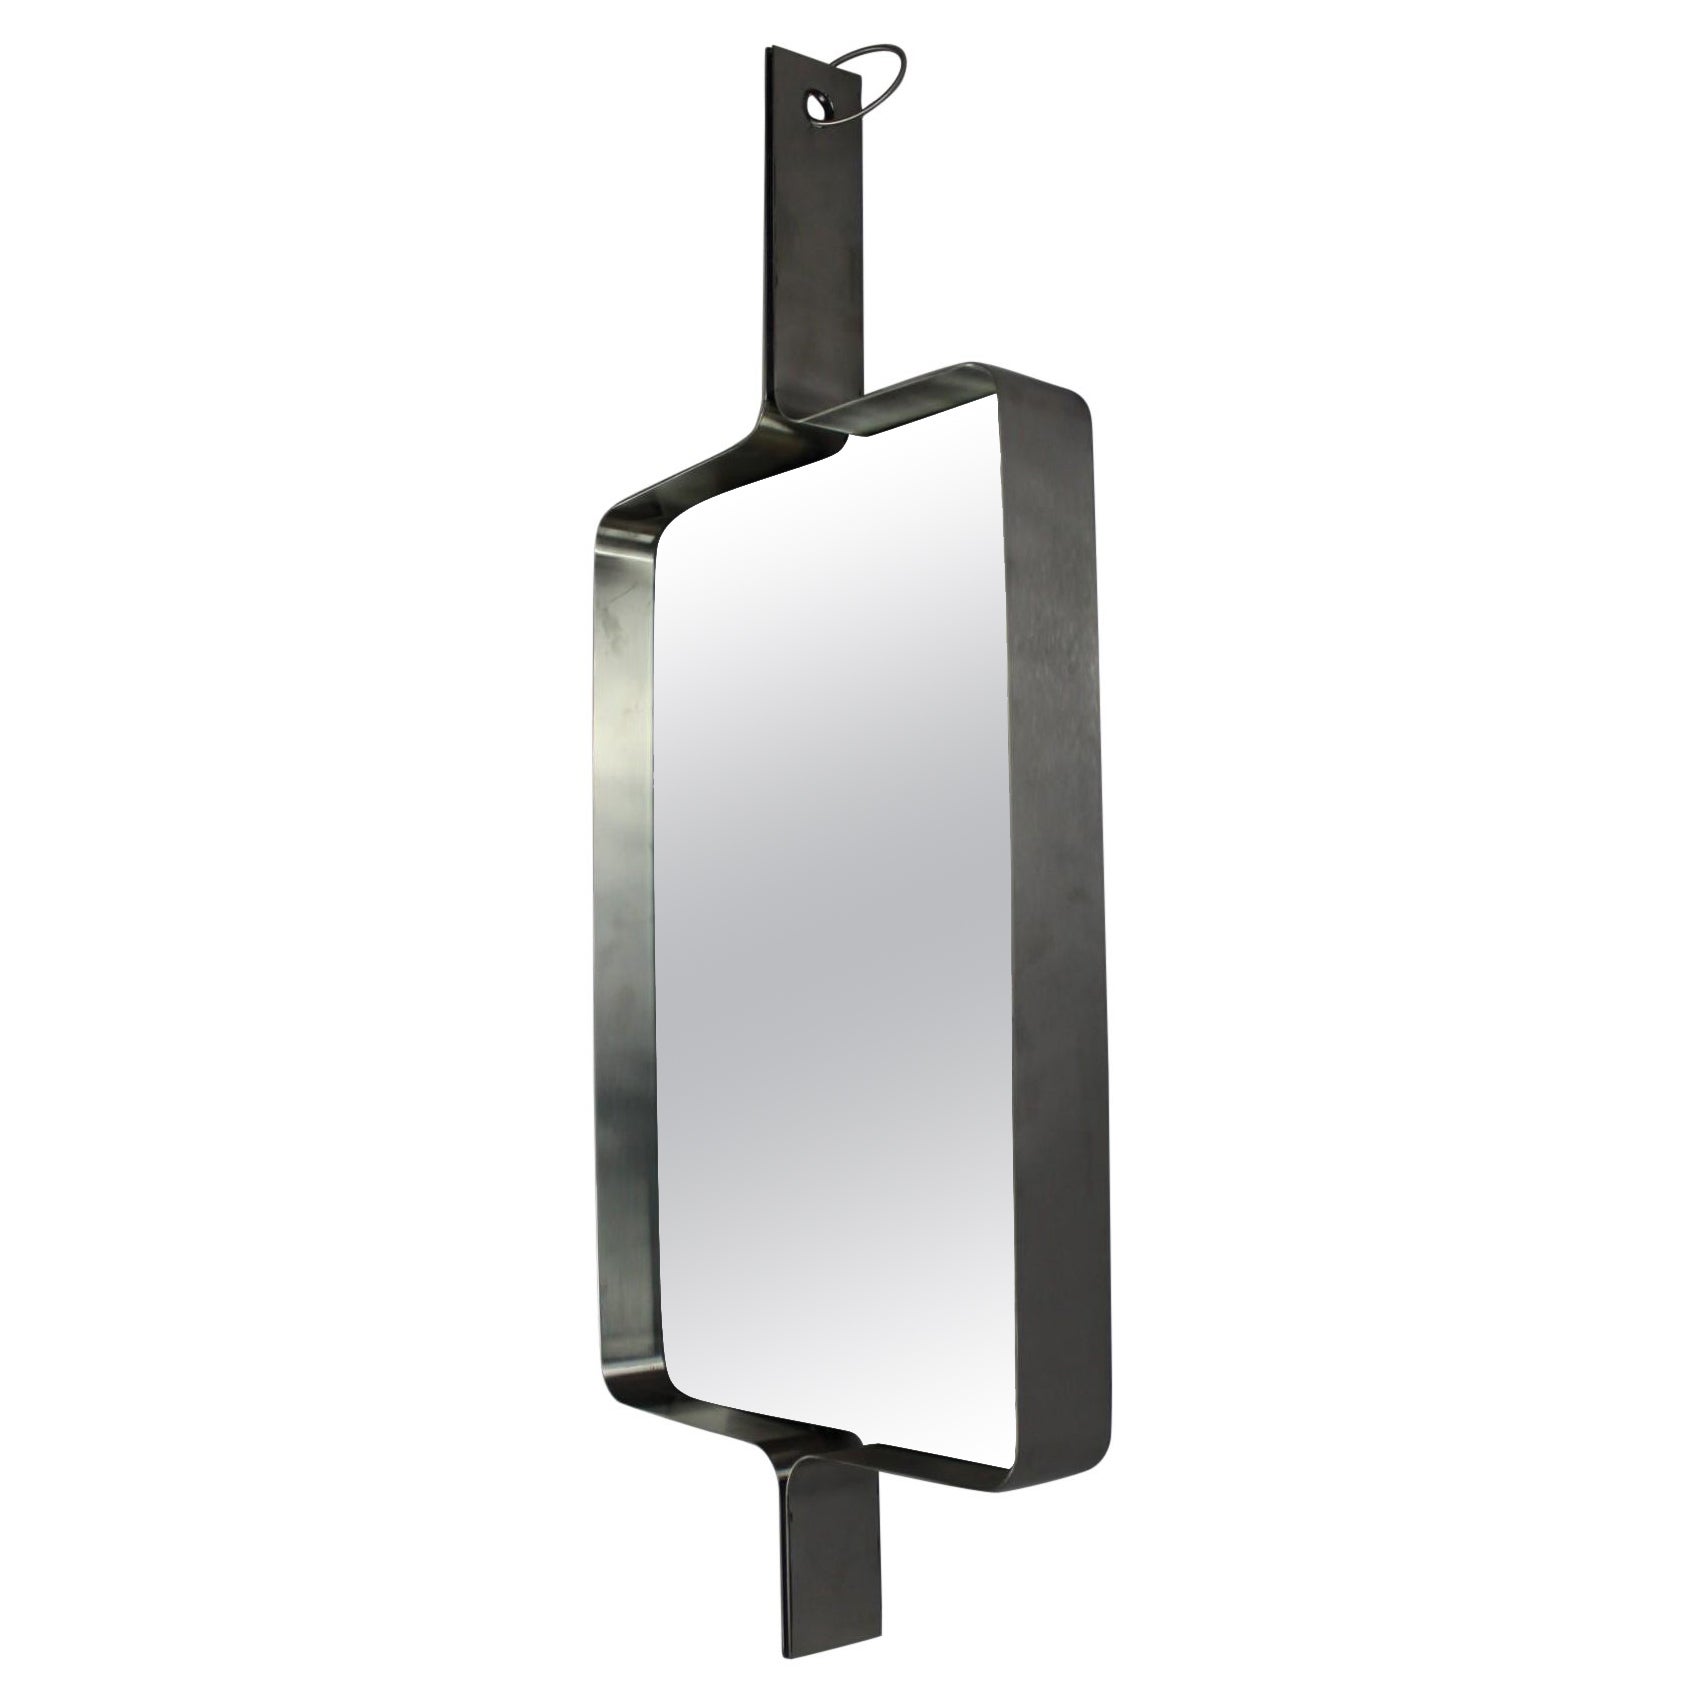 Xavier feal steel brushed rectangular mirror